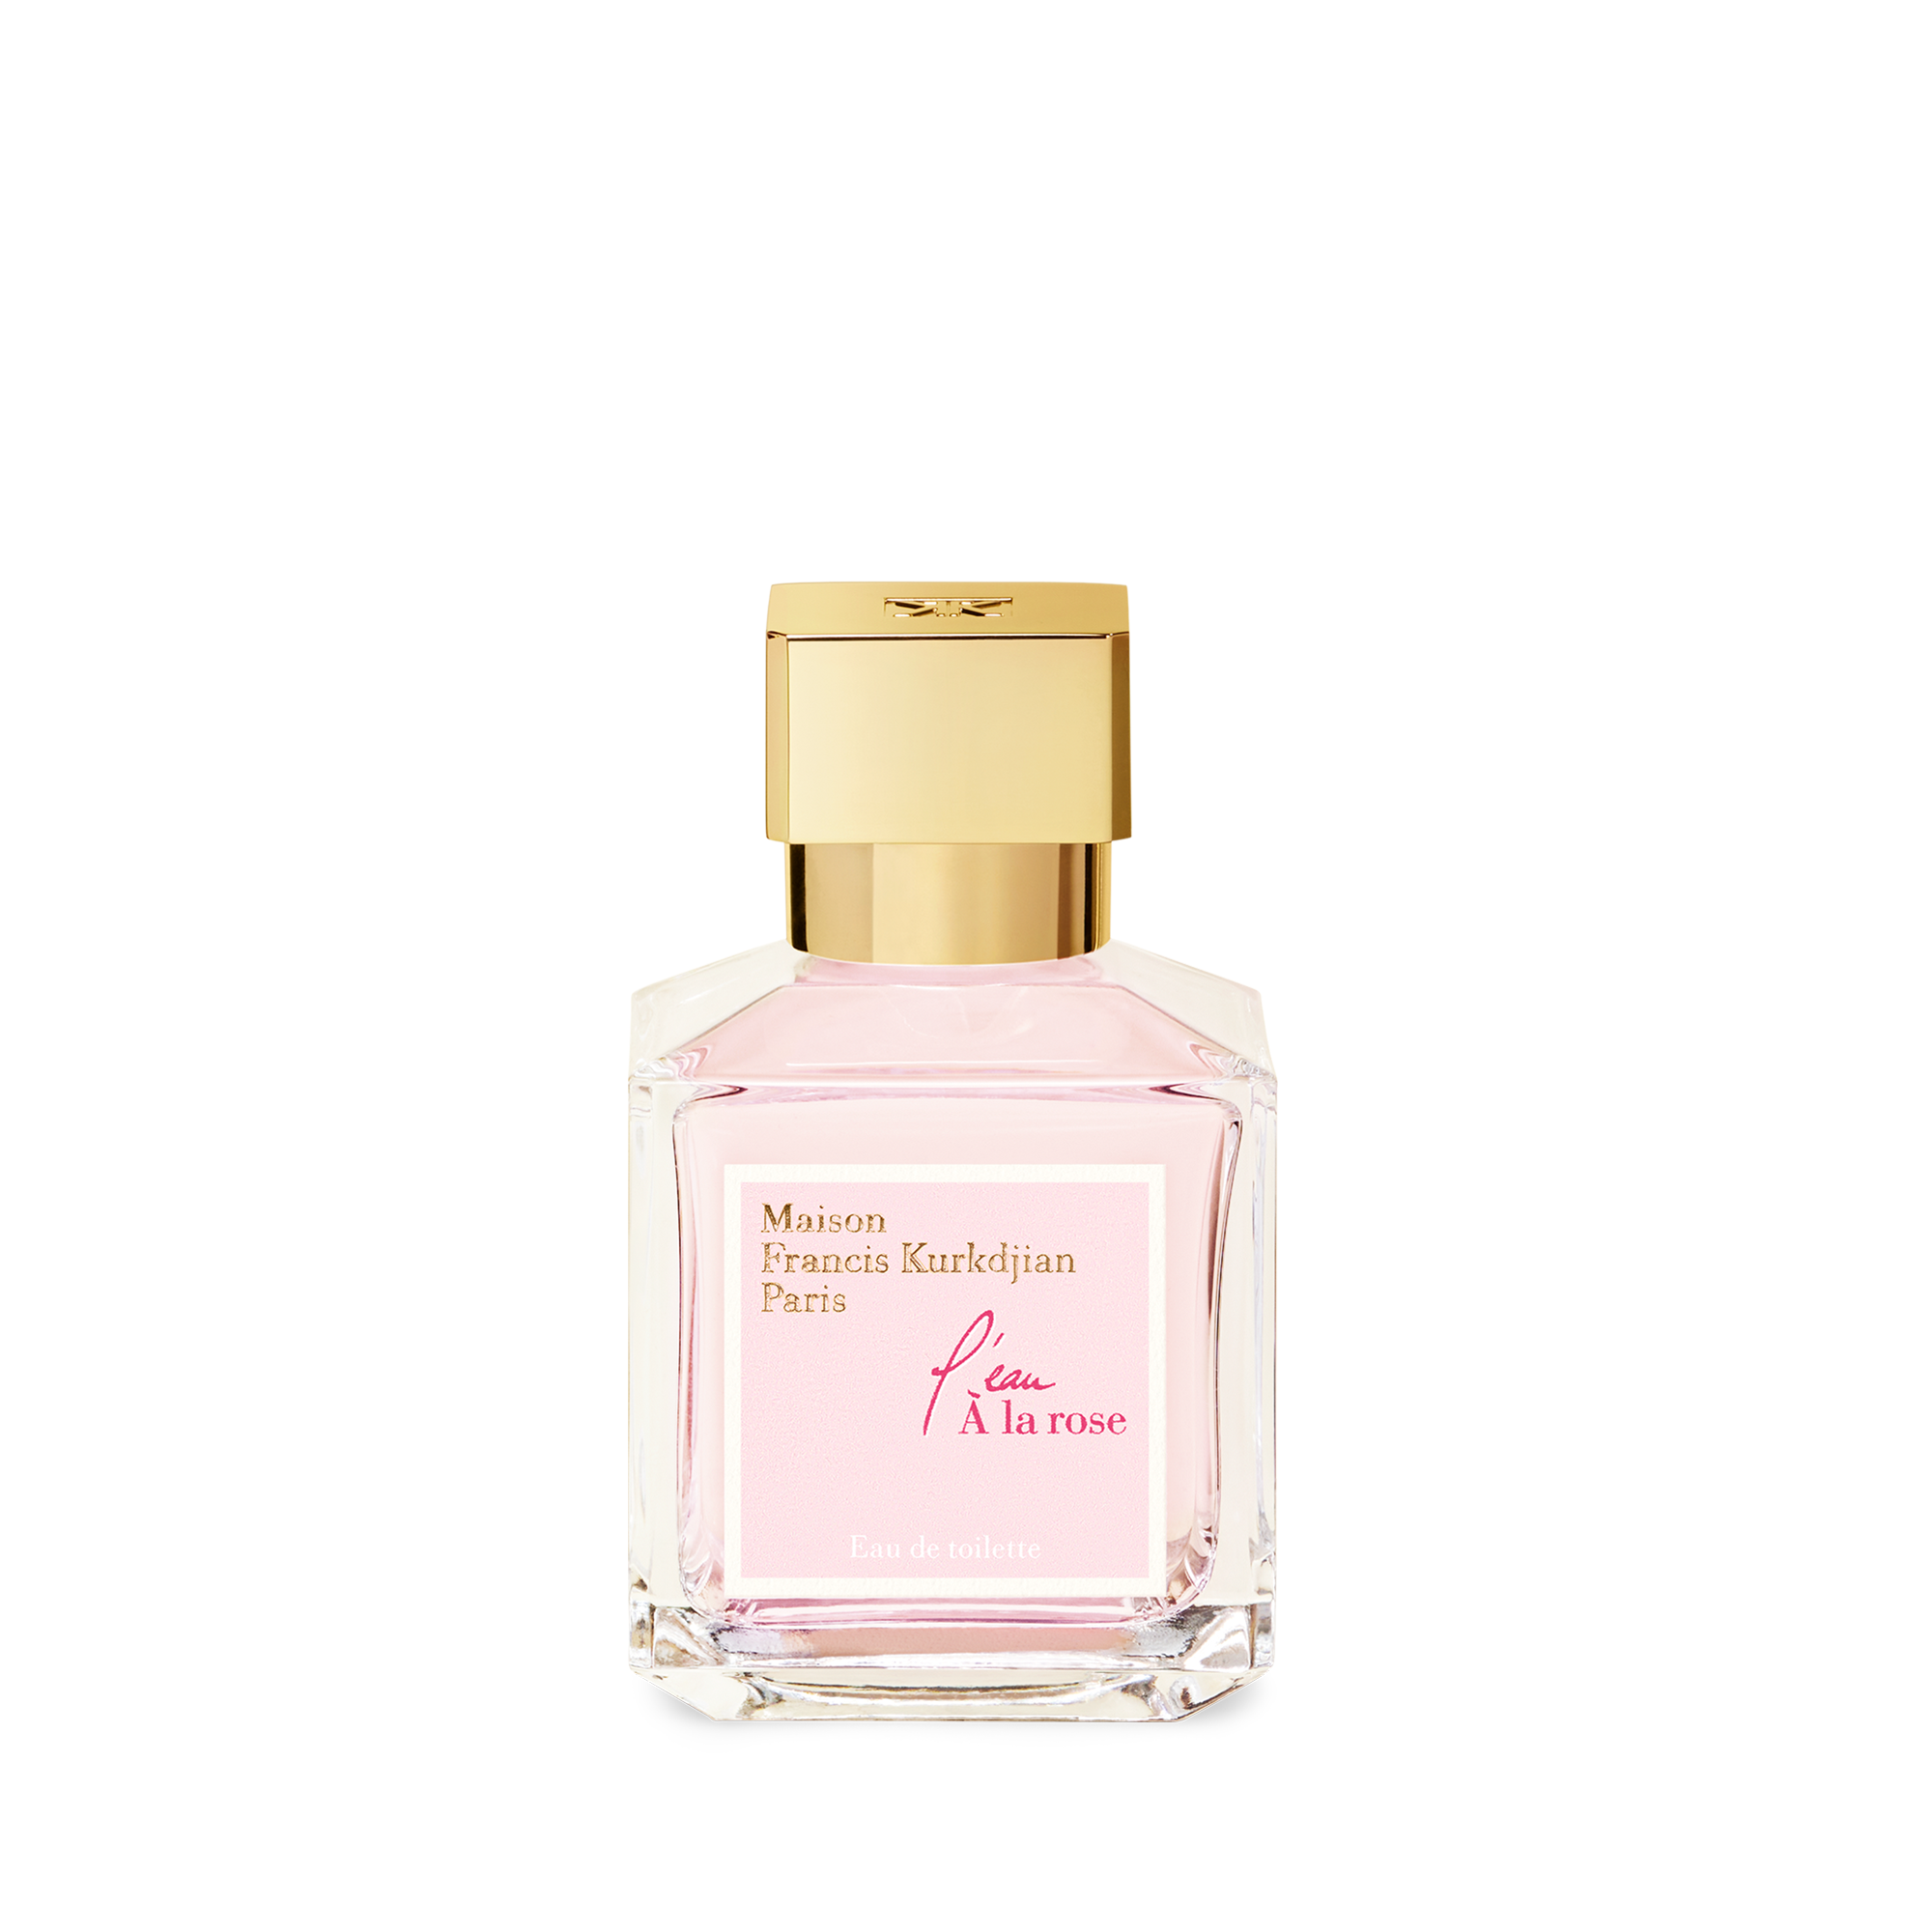 HARMONIE - diffuseur parfum maison – Adrimo paris - Diffuseur parfum maison